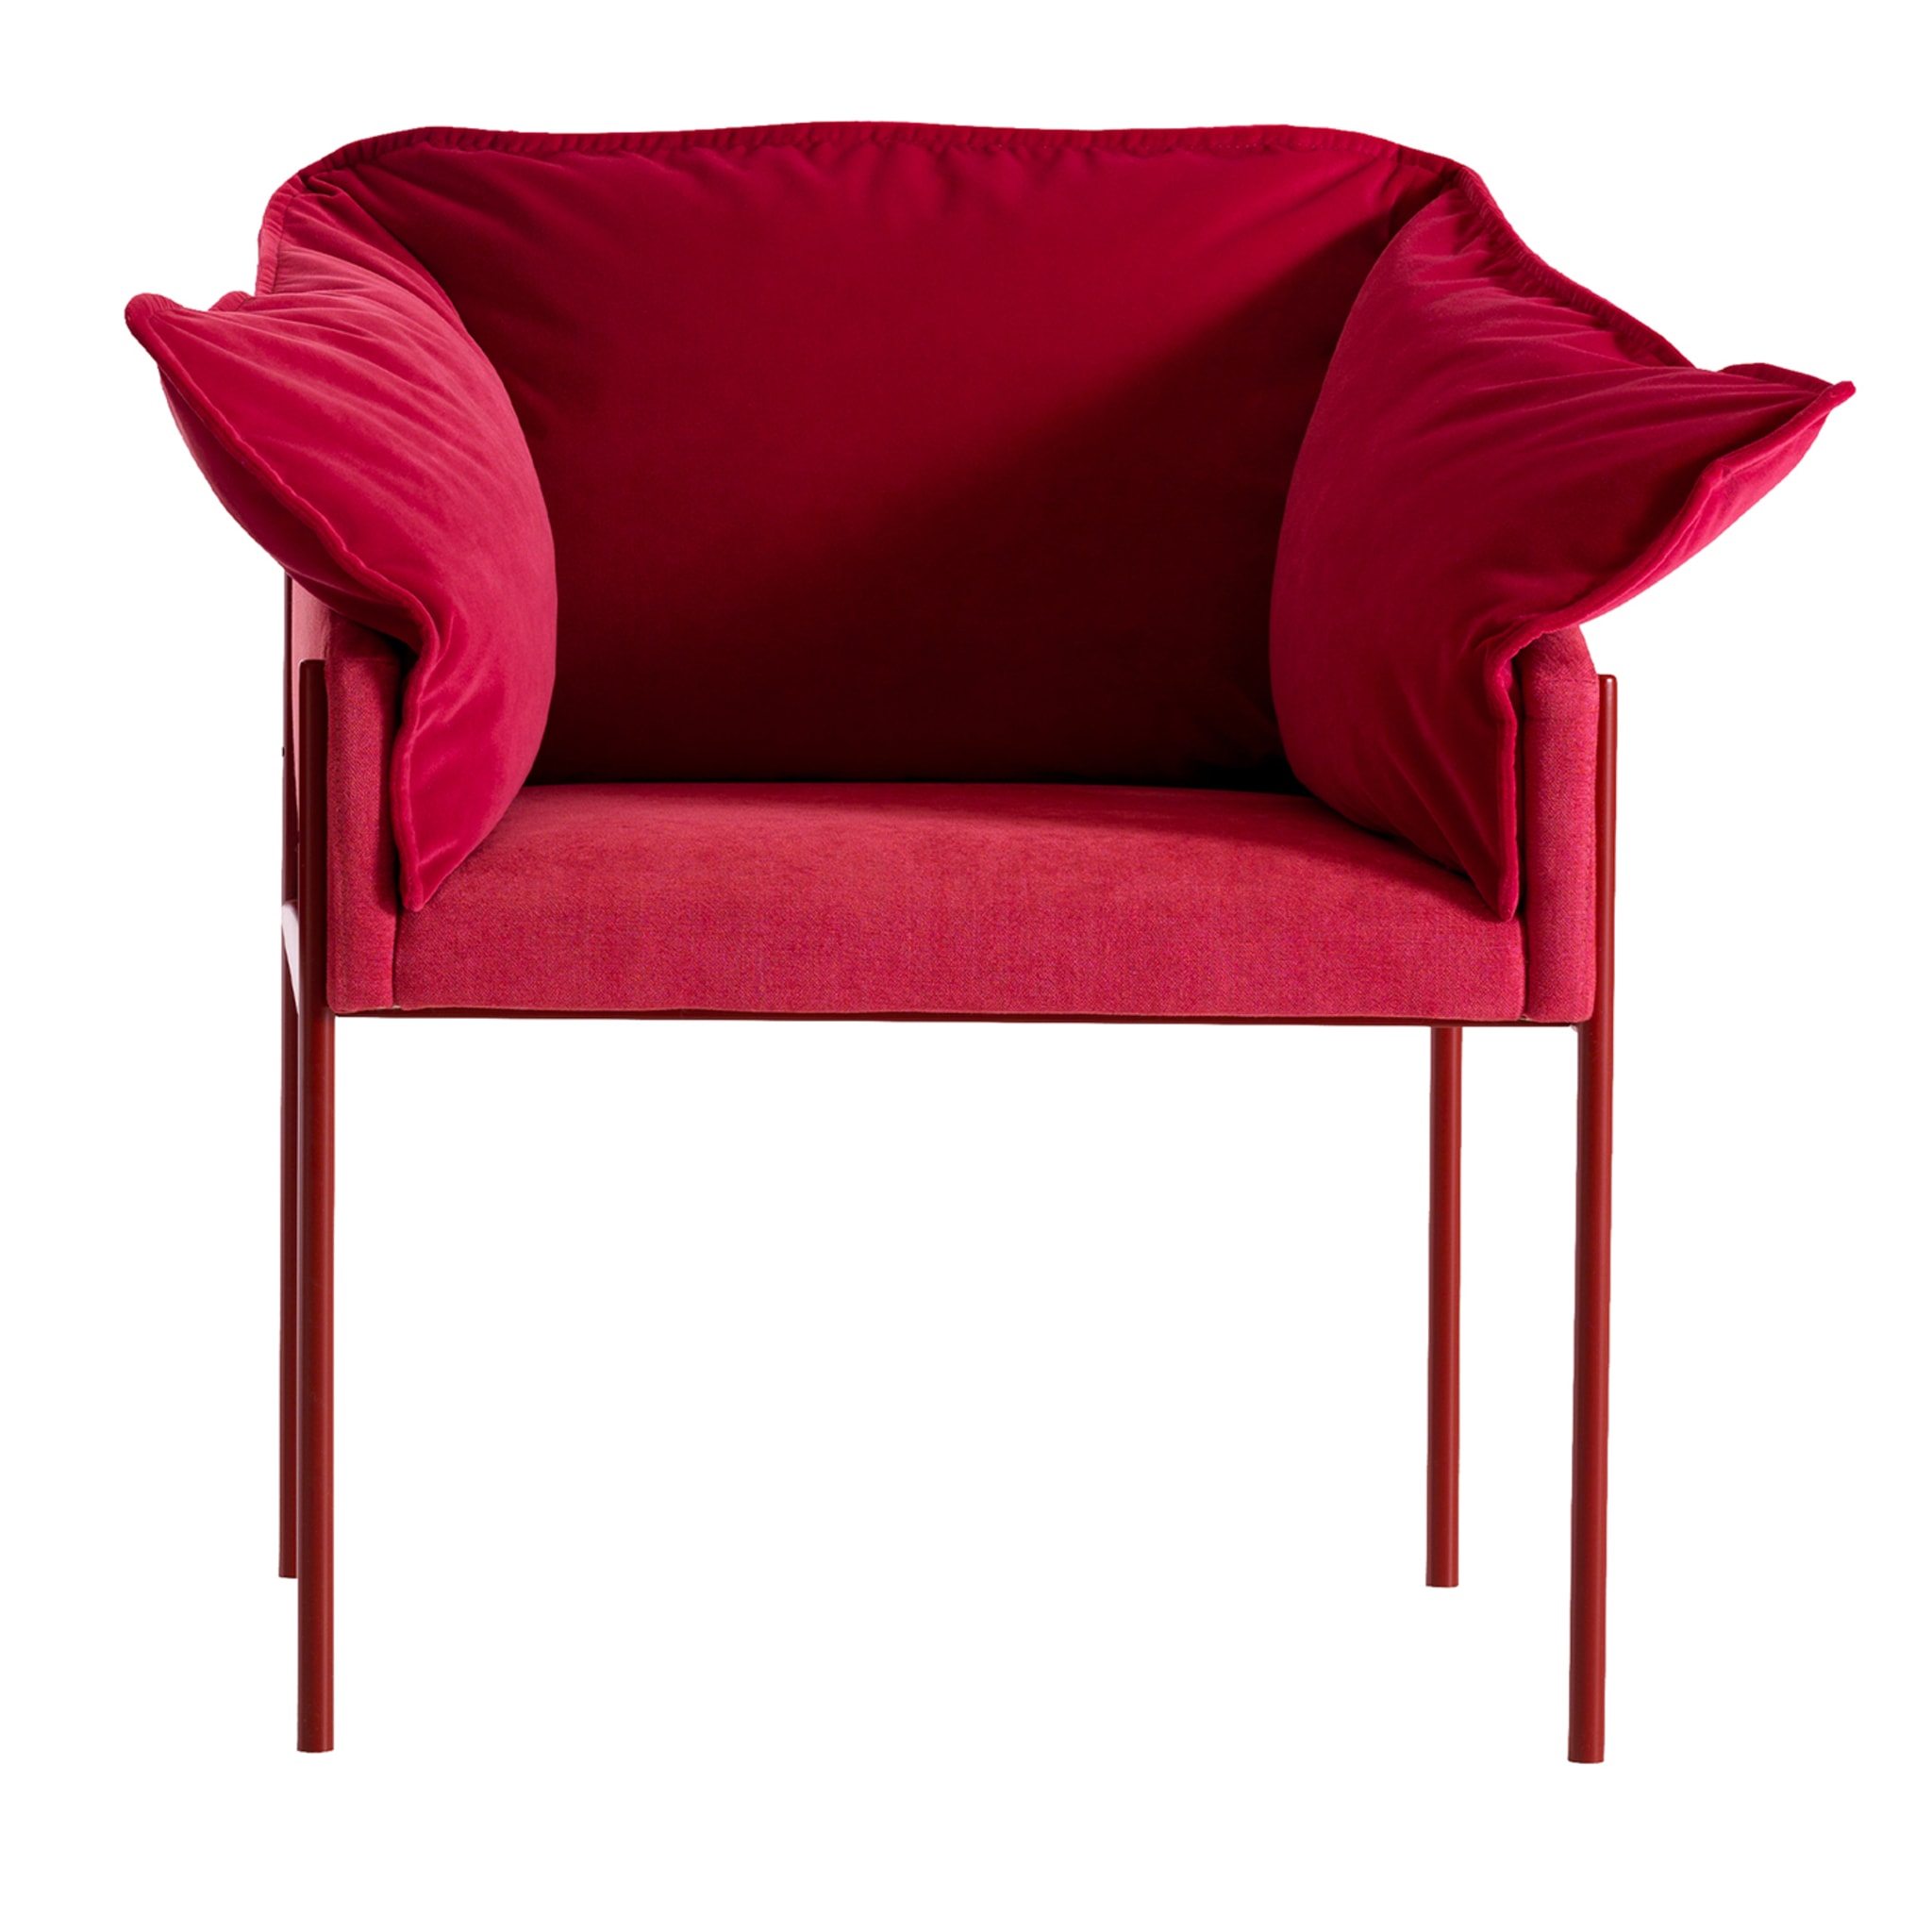 Roter Carmen-Sessel von Angeletti Ruzza - Hauptansicht